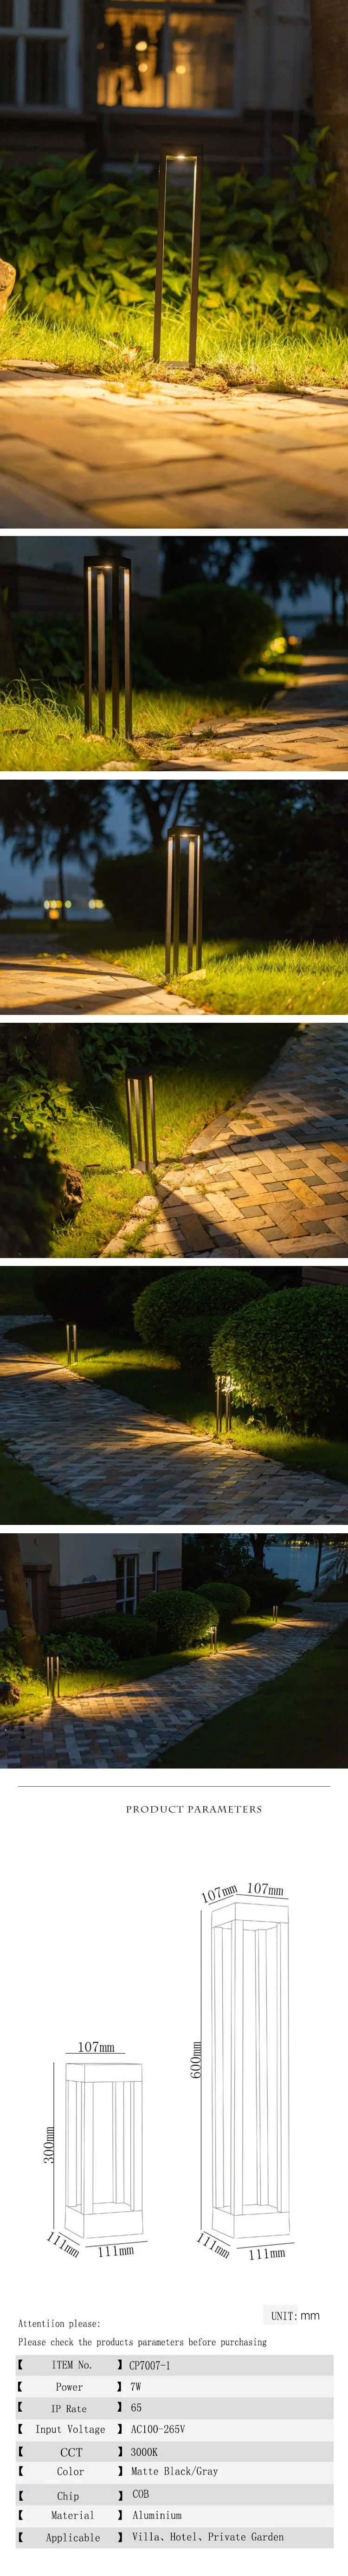 Floor Sun 9LED Flickering Street Copper Light Pillar Outdoor Stand Lamp Landscape Cheap Garden Lawn LED Solar Pathway Lighting